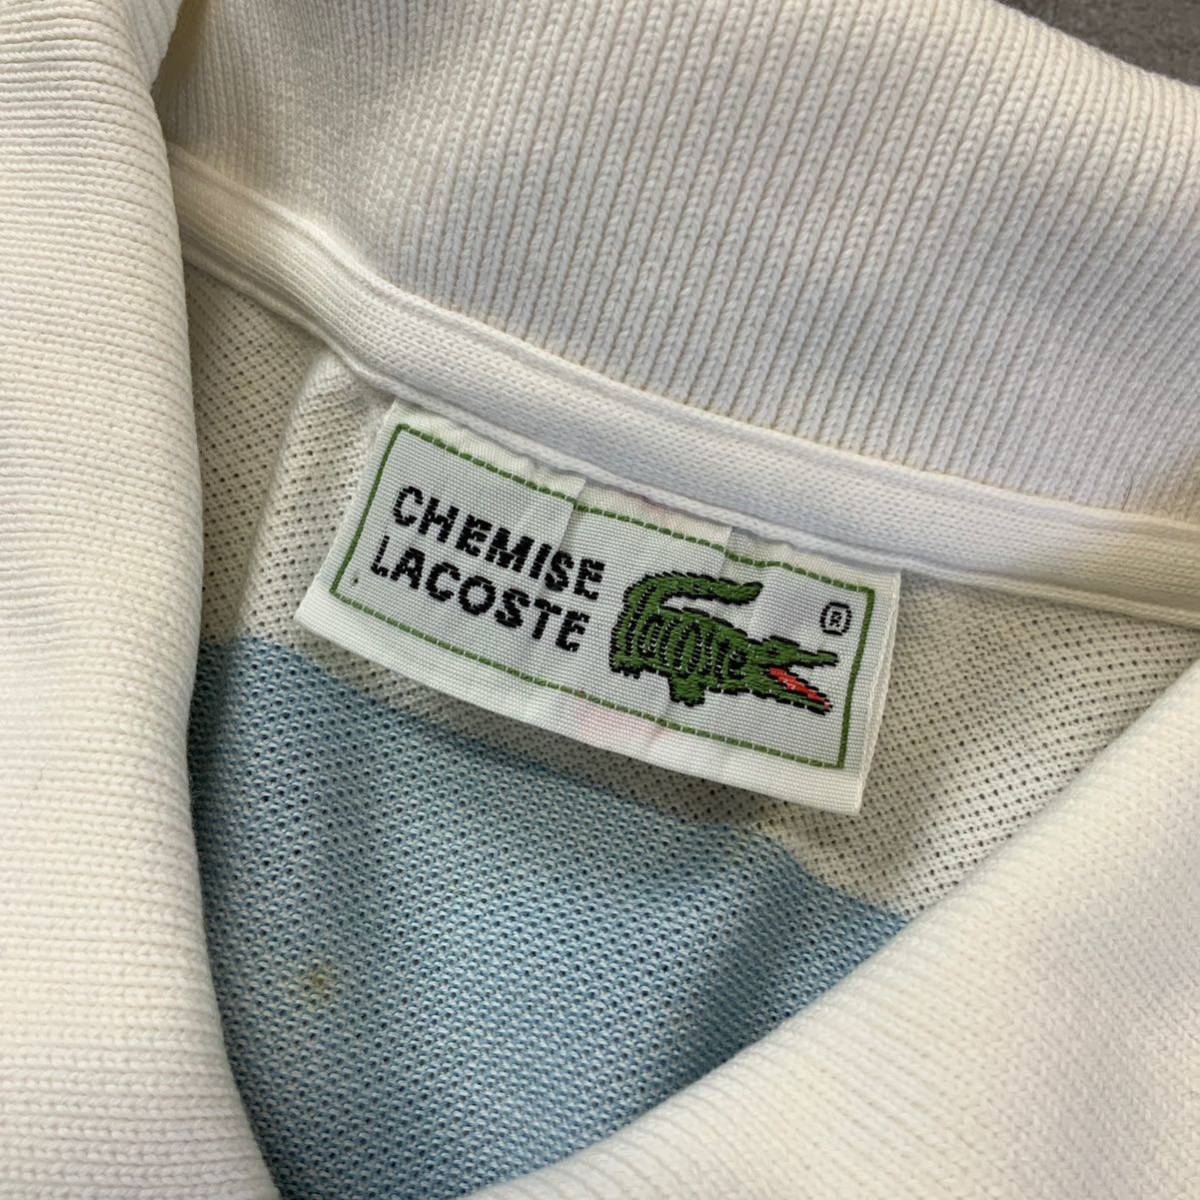 80s CHEMISE LACOSTE シュミーズラコステ 太ボーダー 鹿子 半袖 ポロシャツ メンズ サイズ3 ホワイト ライトブルー ゴルフ golf_画像7